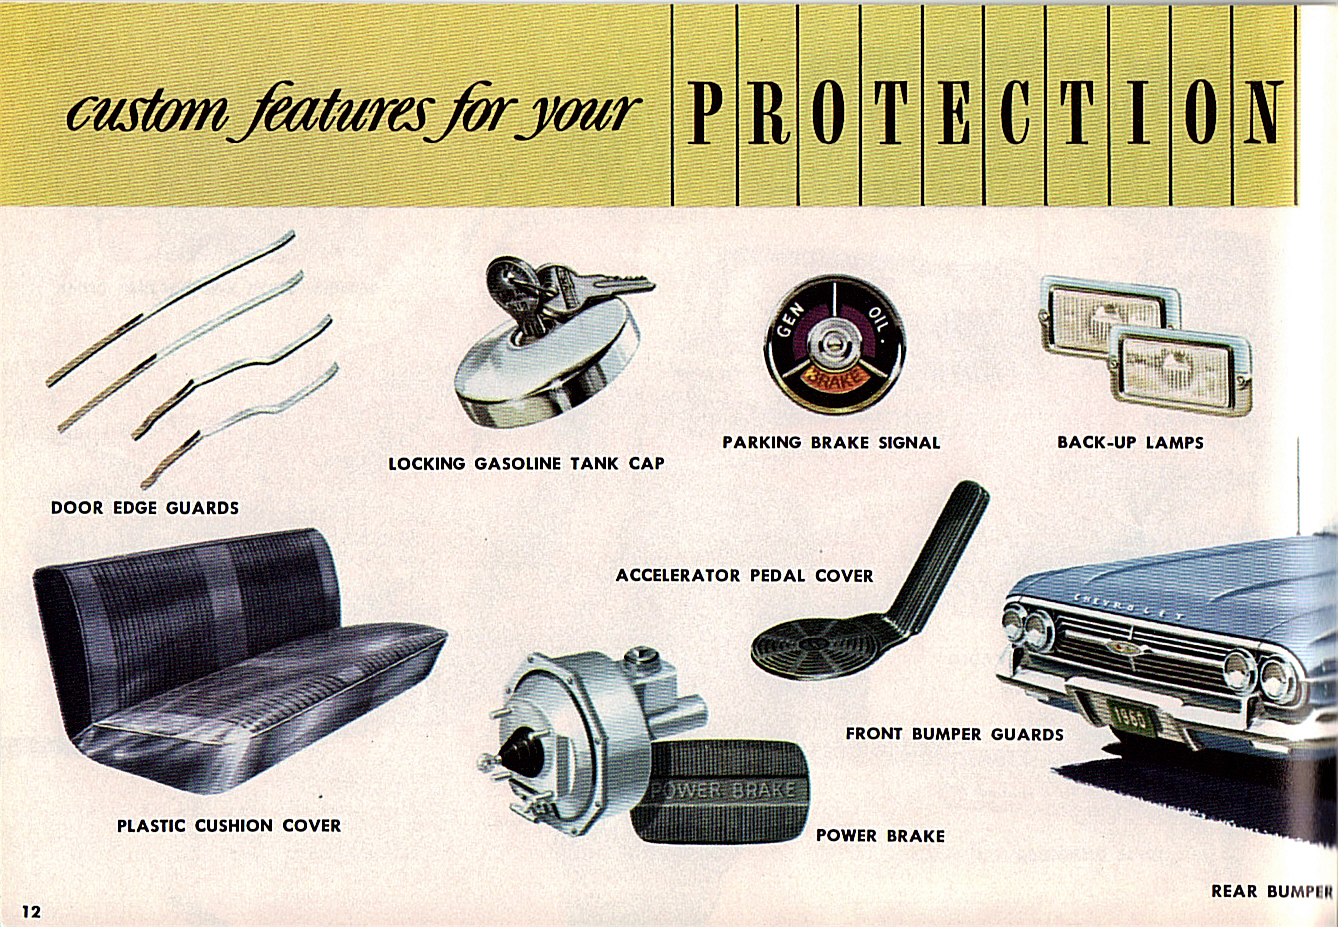 1960_Chevrolet_Custom_Features-12